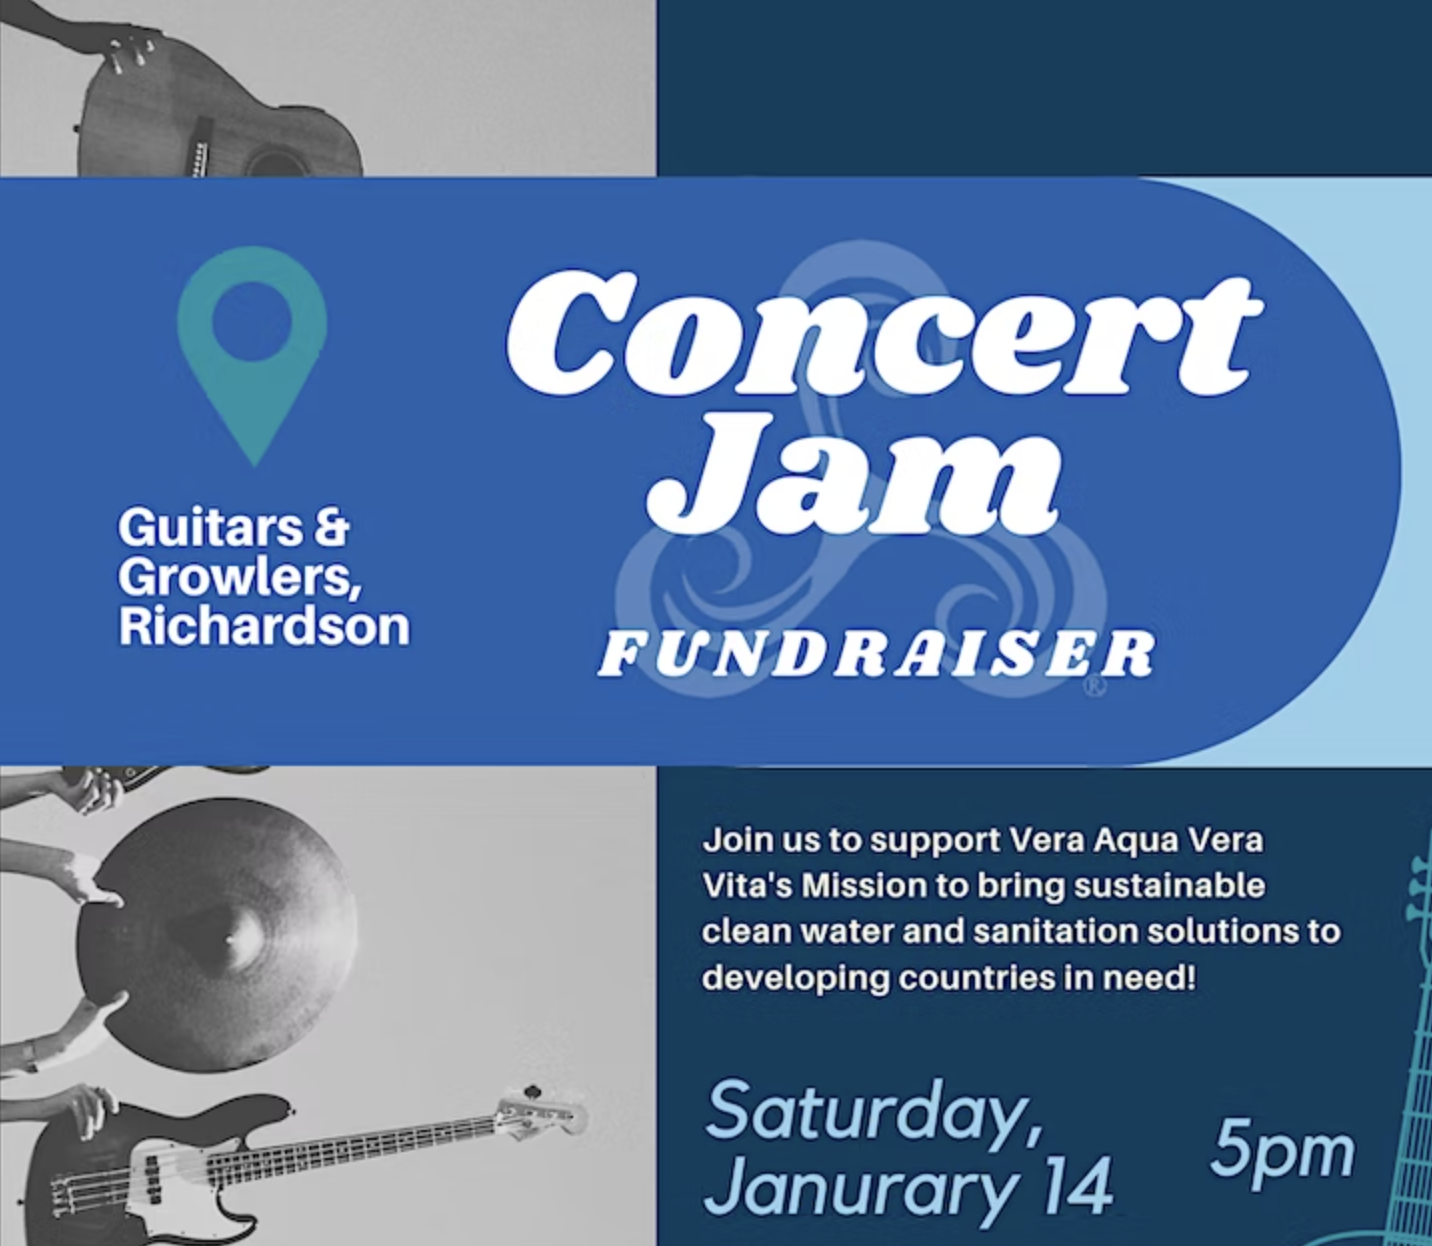 holiday fundraiser, a concert jam fundraiser is raising money for Vera Aqua Vera Vita